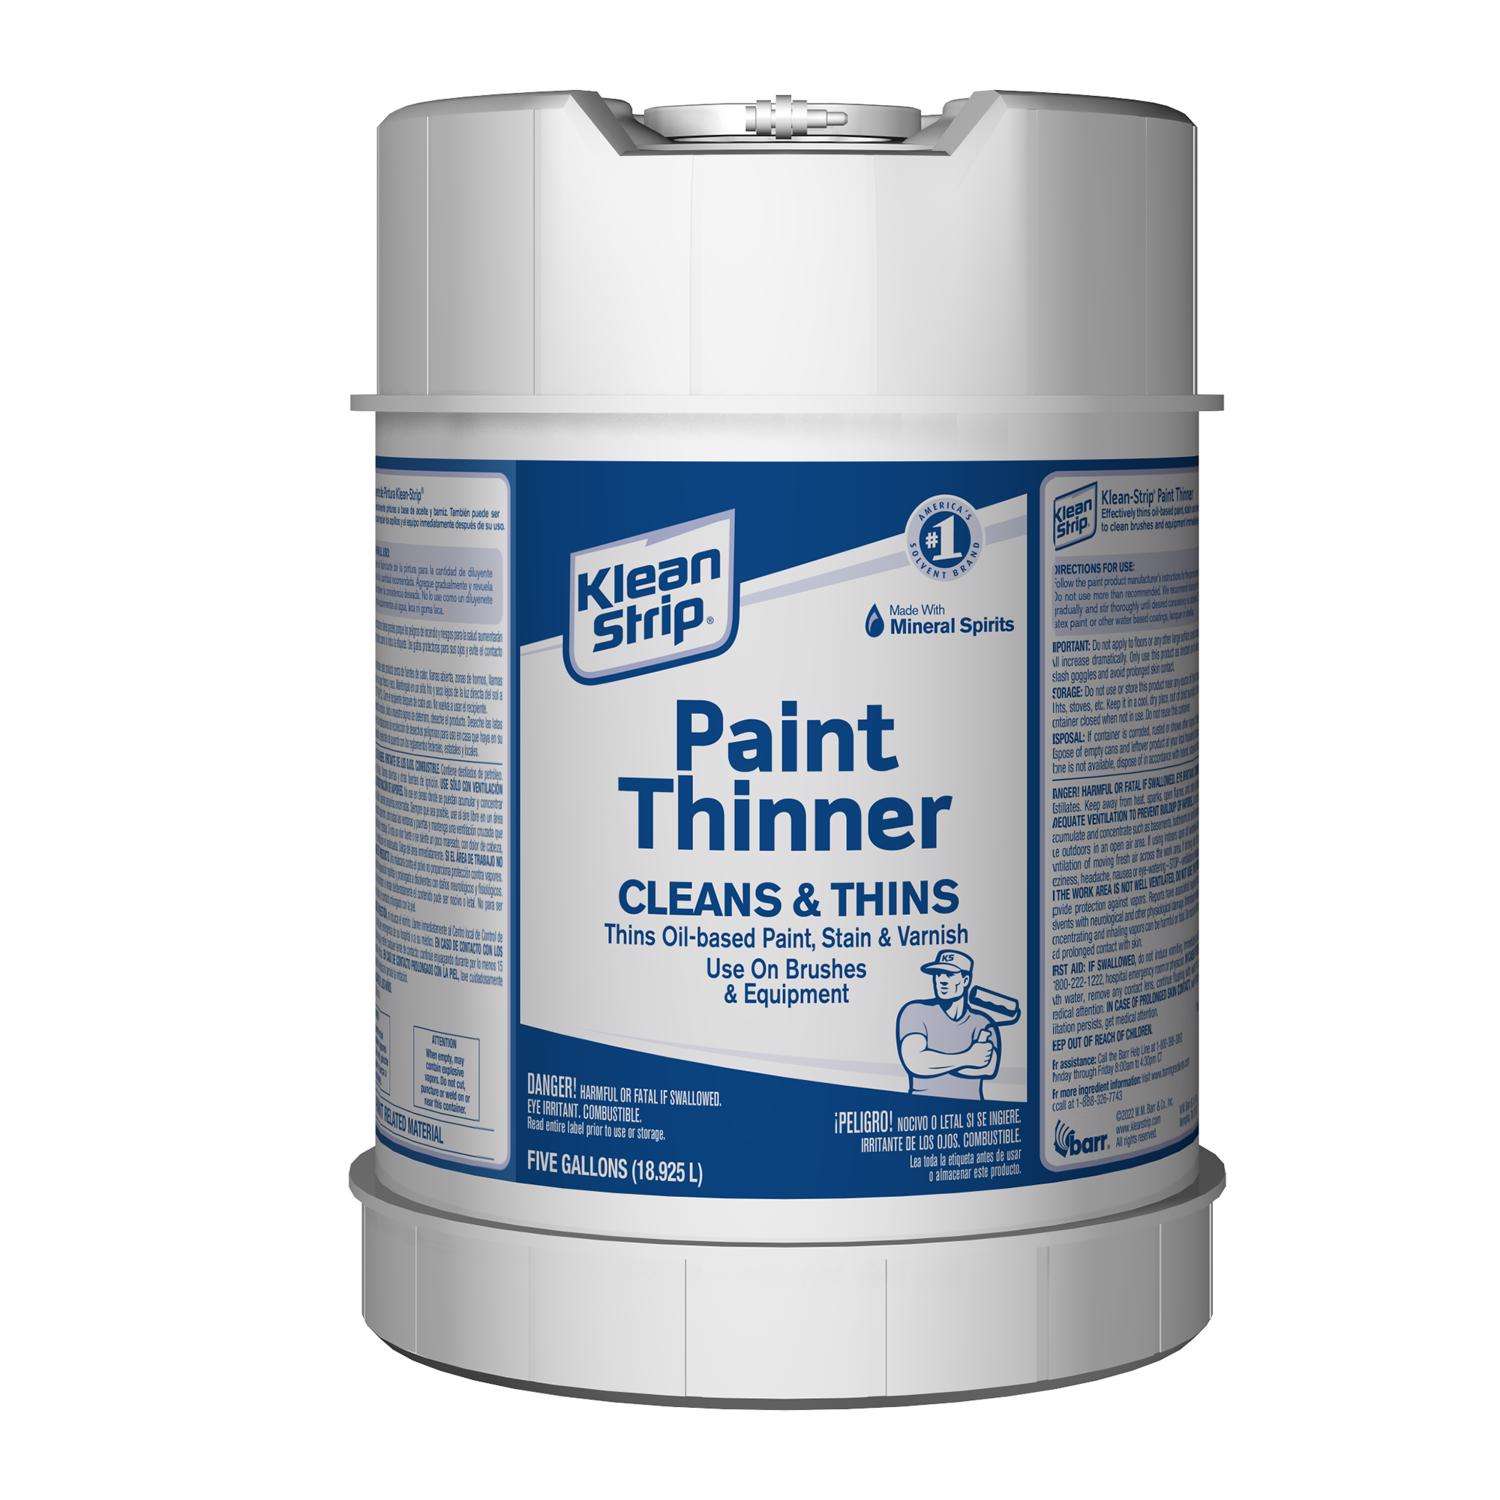 Klean Strip Paint Thinner 1 Gallon - Cleans Enamel Paint and